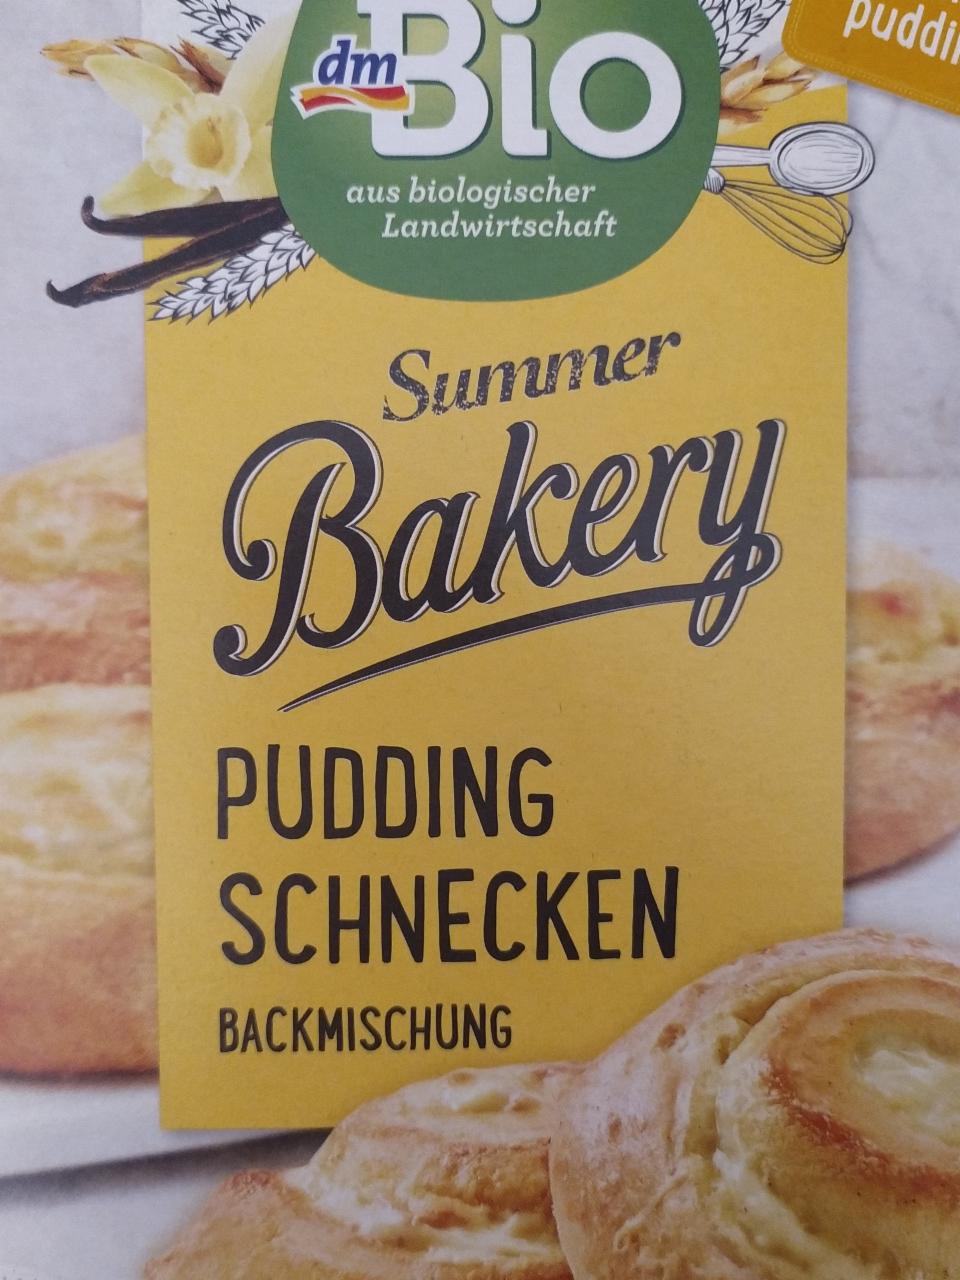 Fotografie - Summer Bakery Pudding-Schnecken Backmischung dmBio